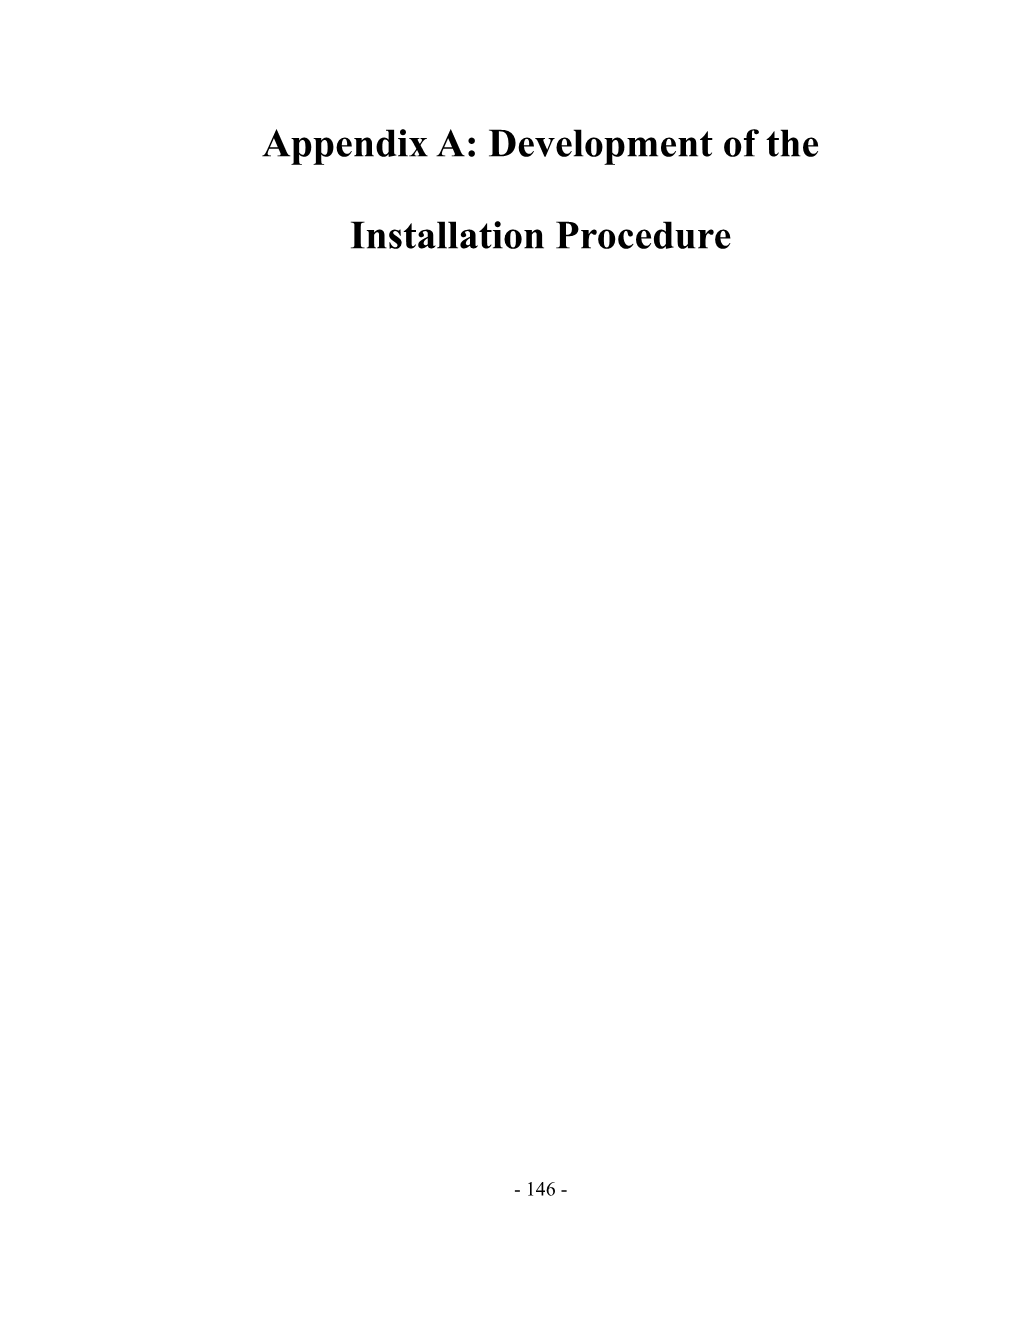 Appendix A: Development of the Installation Procedure